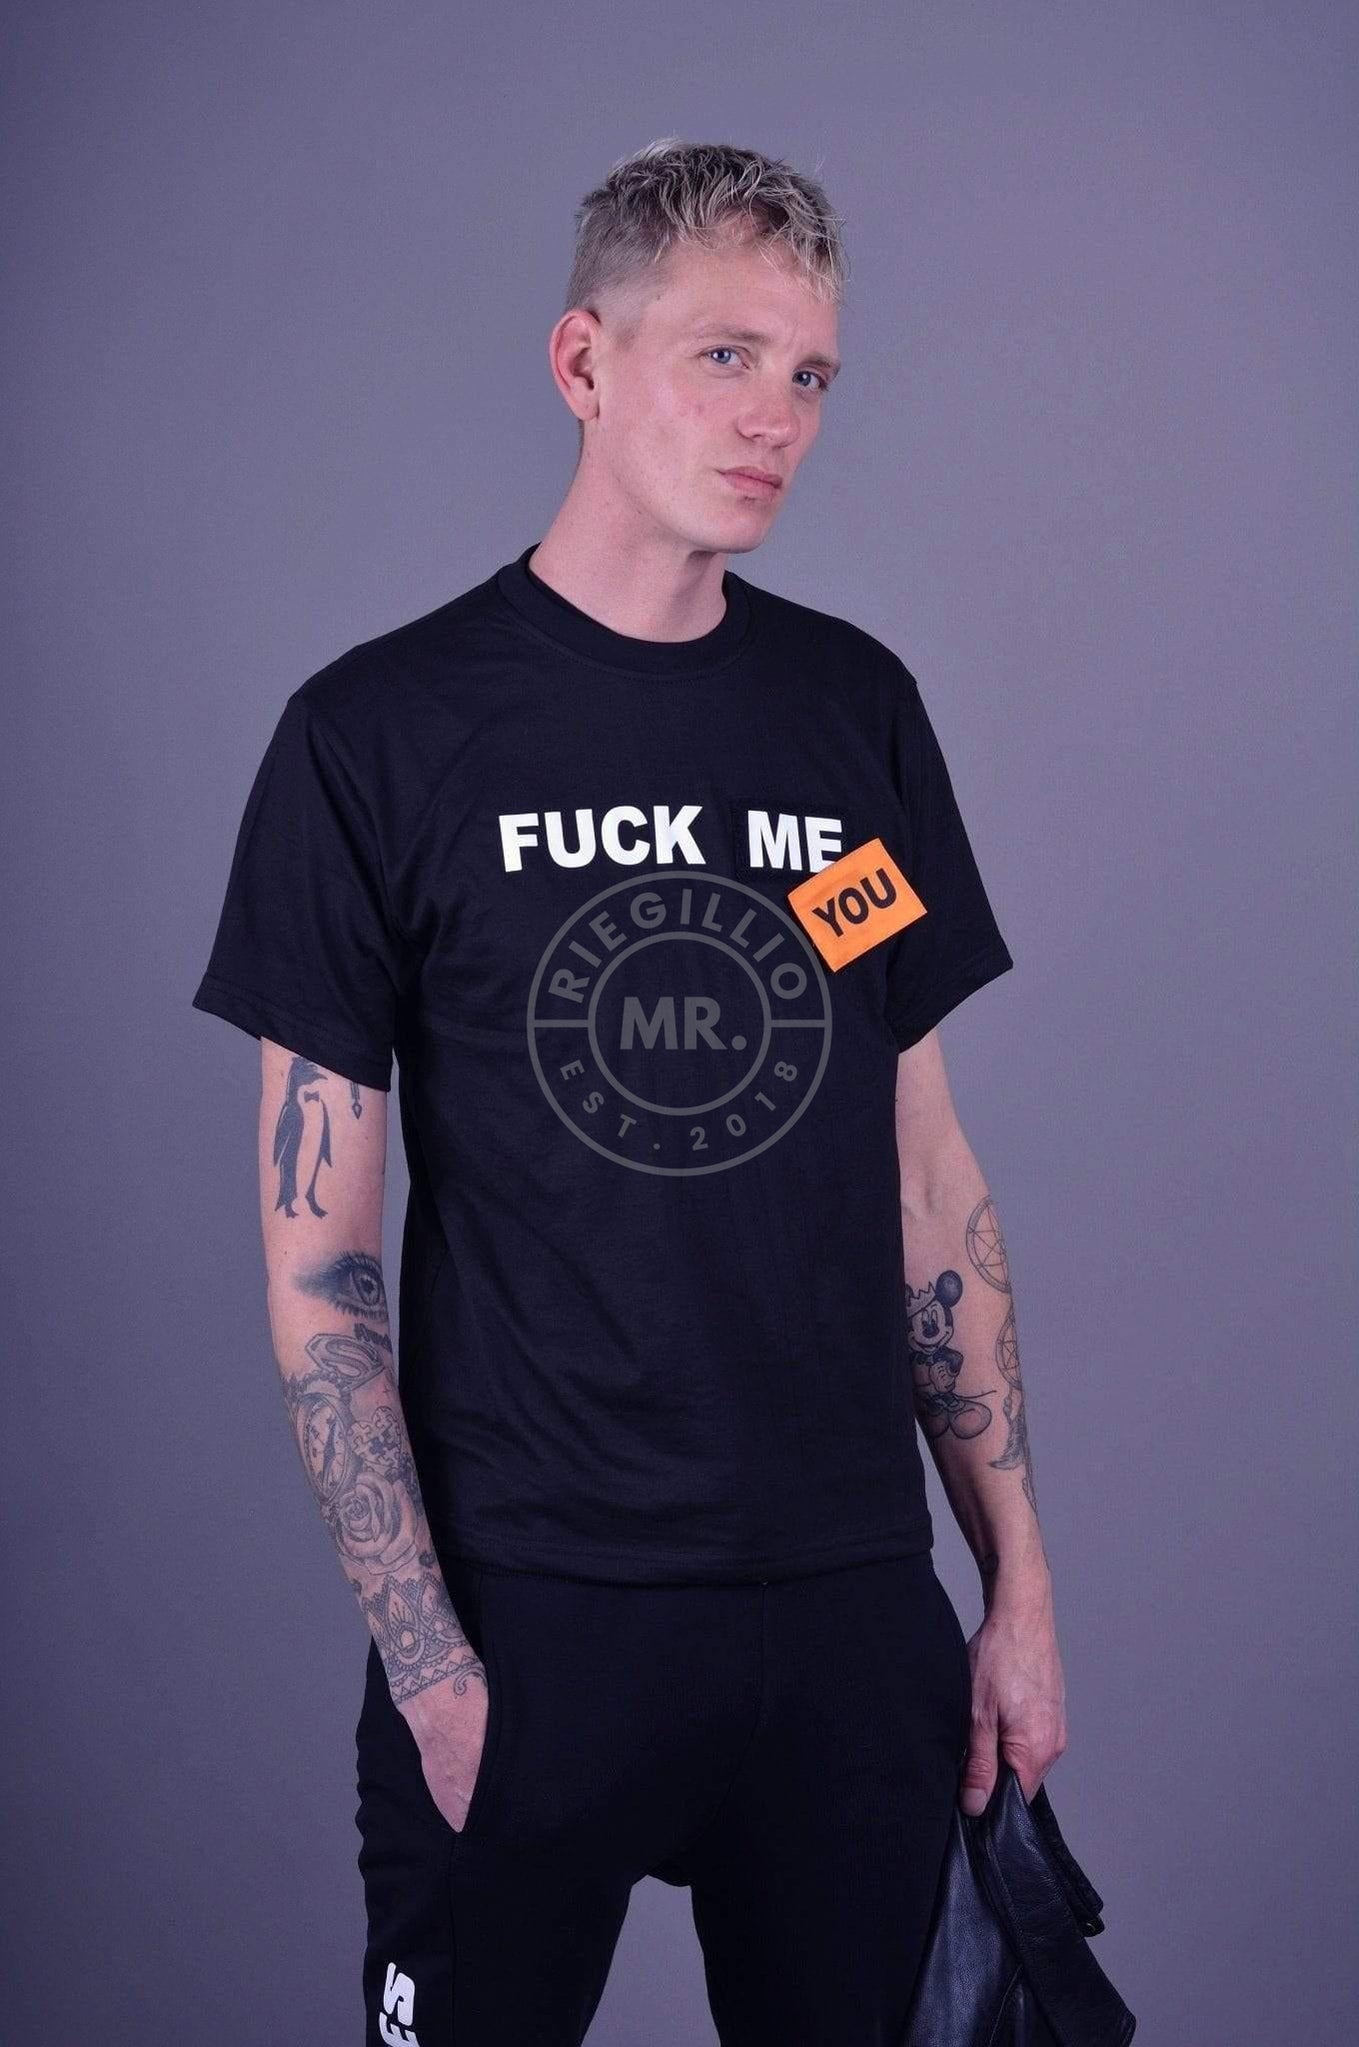 Fuck ME/YOU T-Shirt at MR. Riegillio